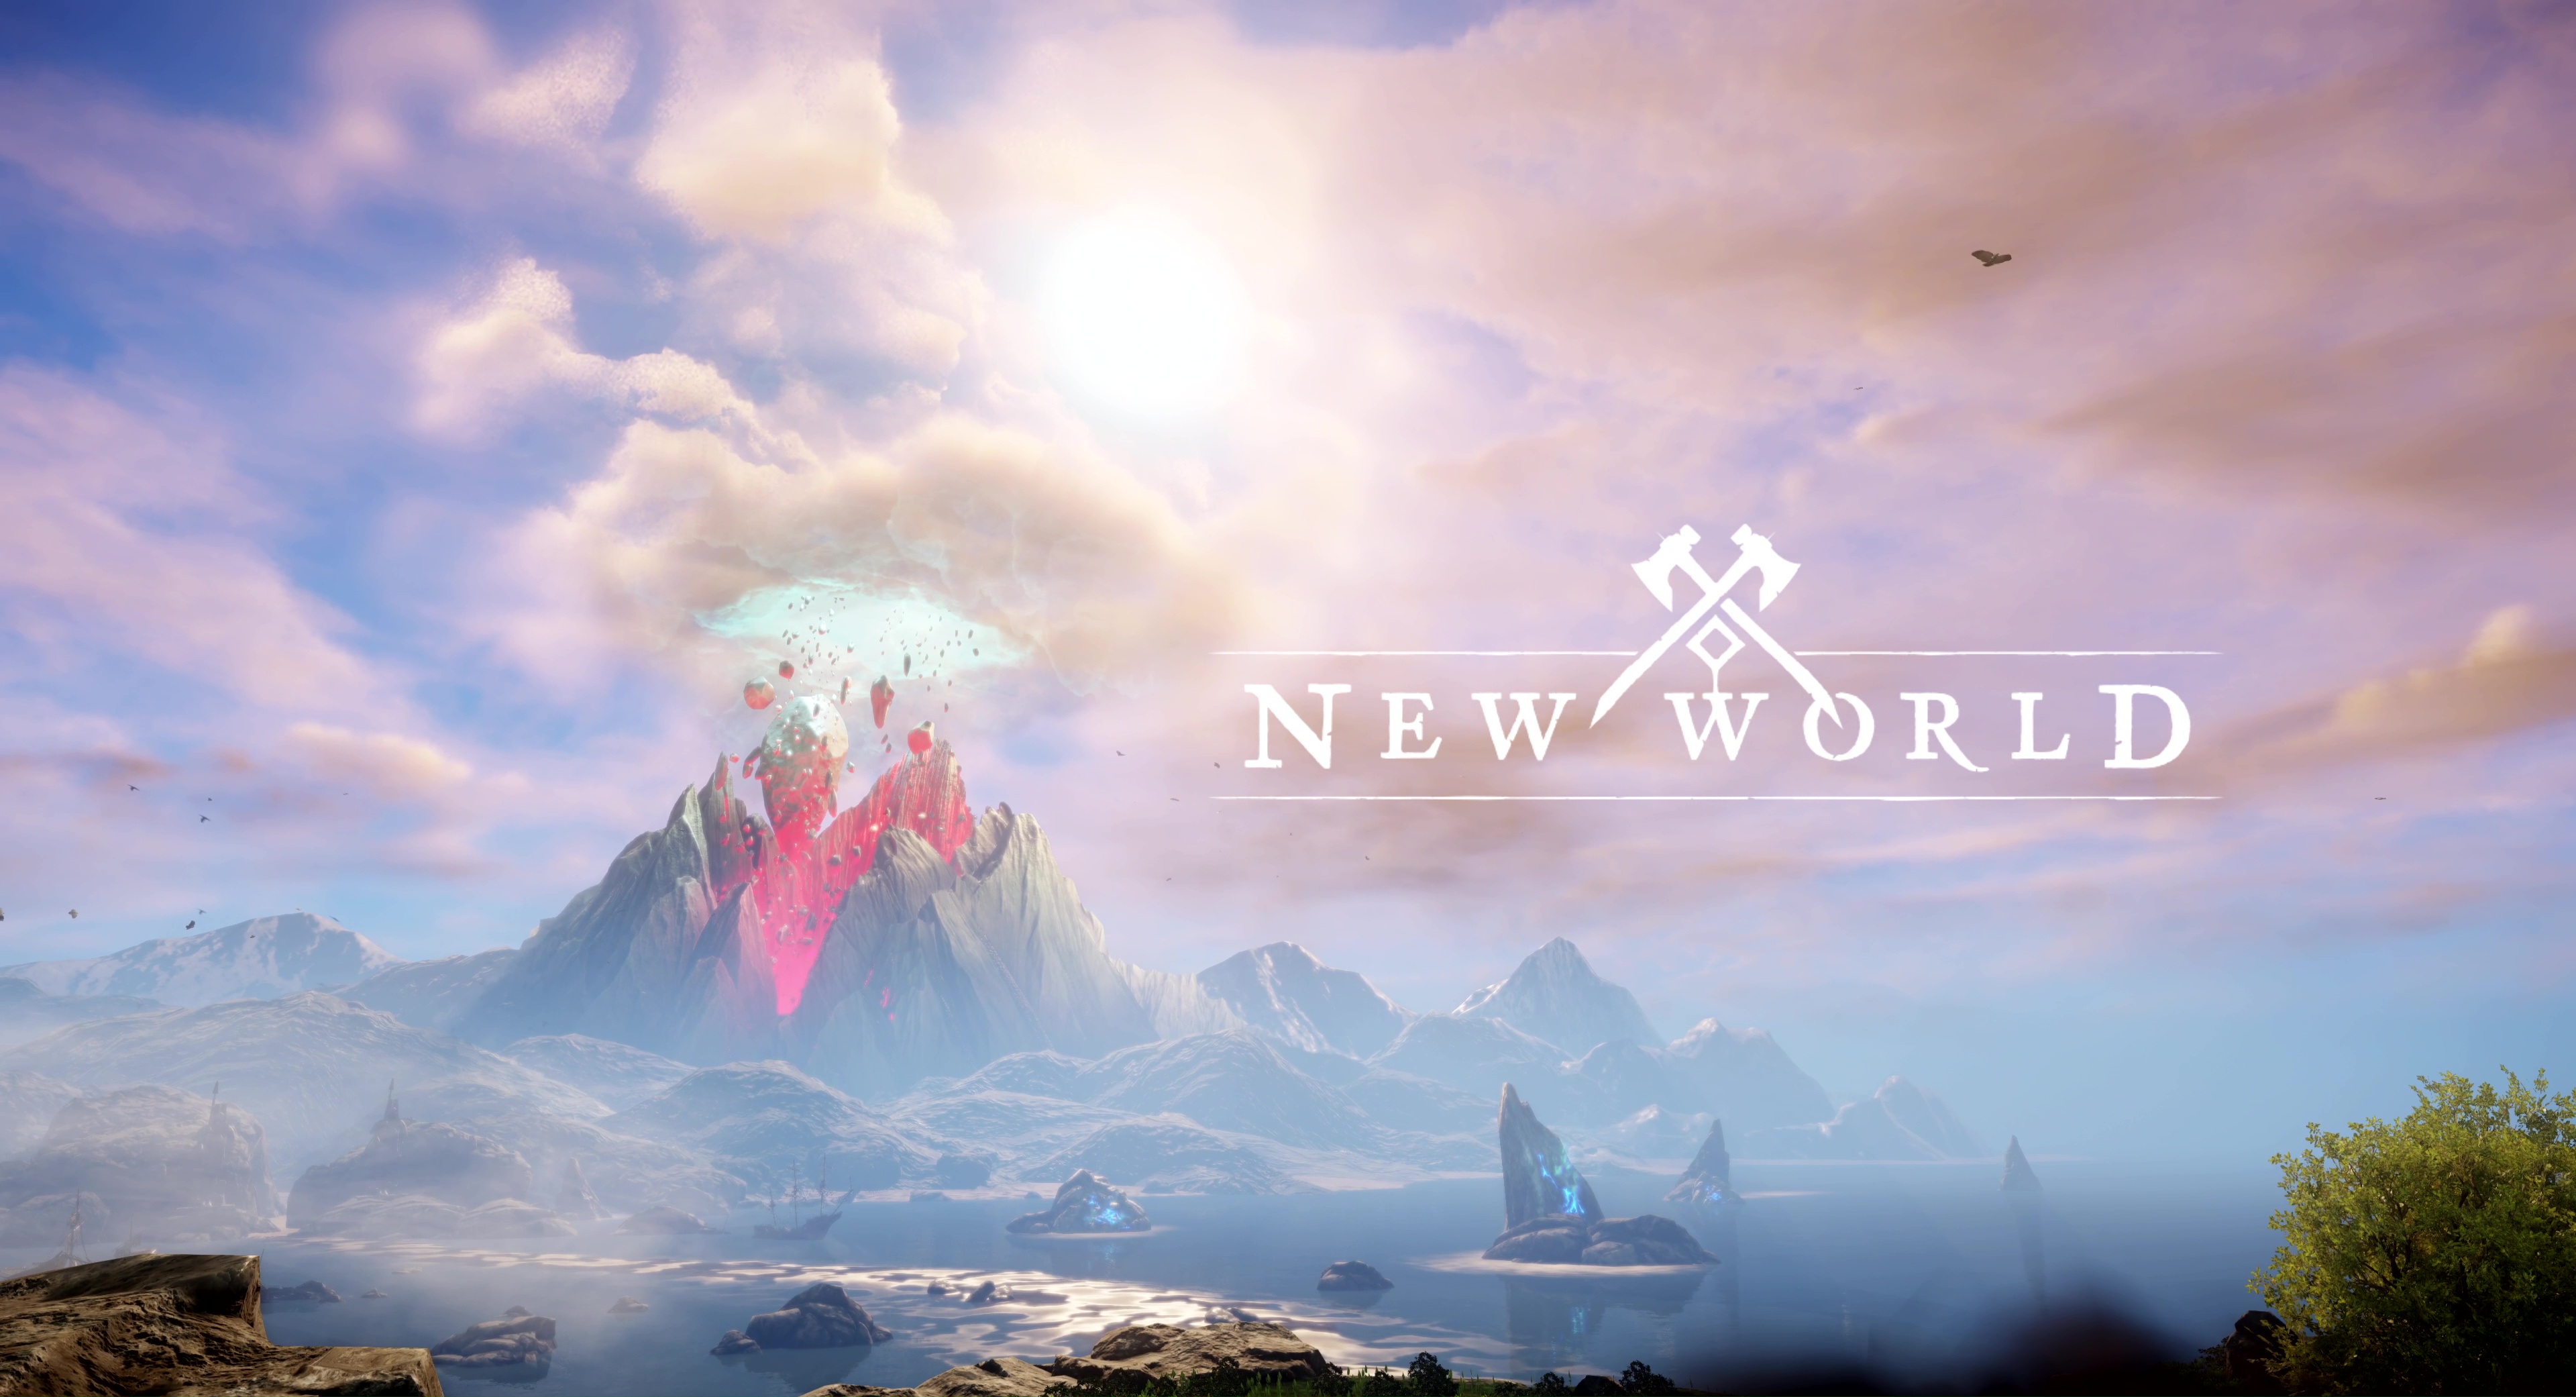 New world server. New World (игра). New World фон. New World Faiths. New World картинки.